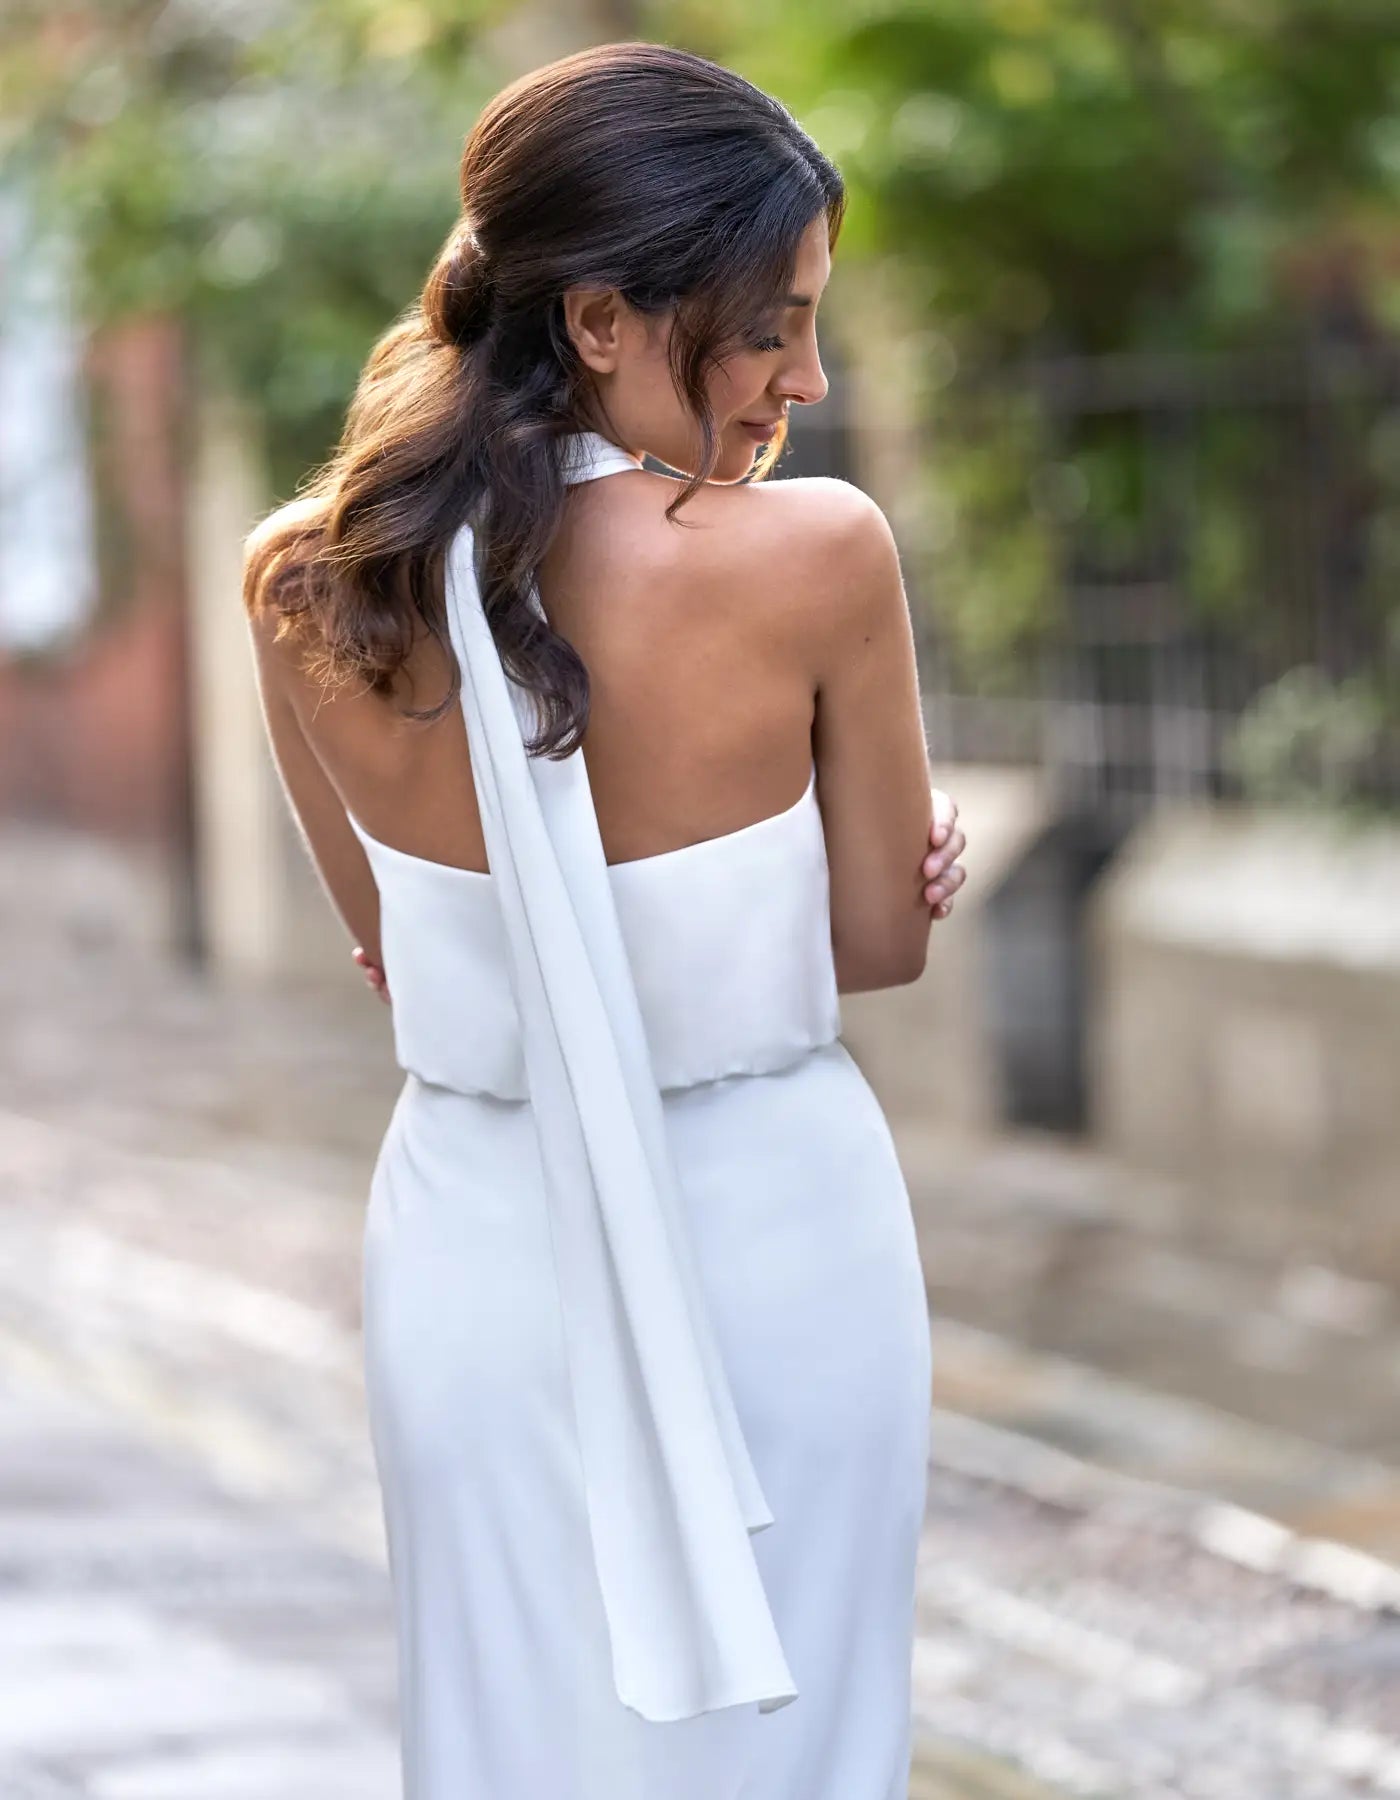 AerbaDress a modern halter neck sheath gown